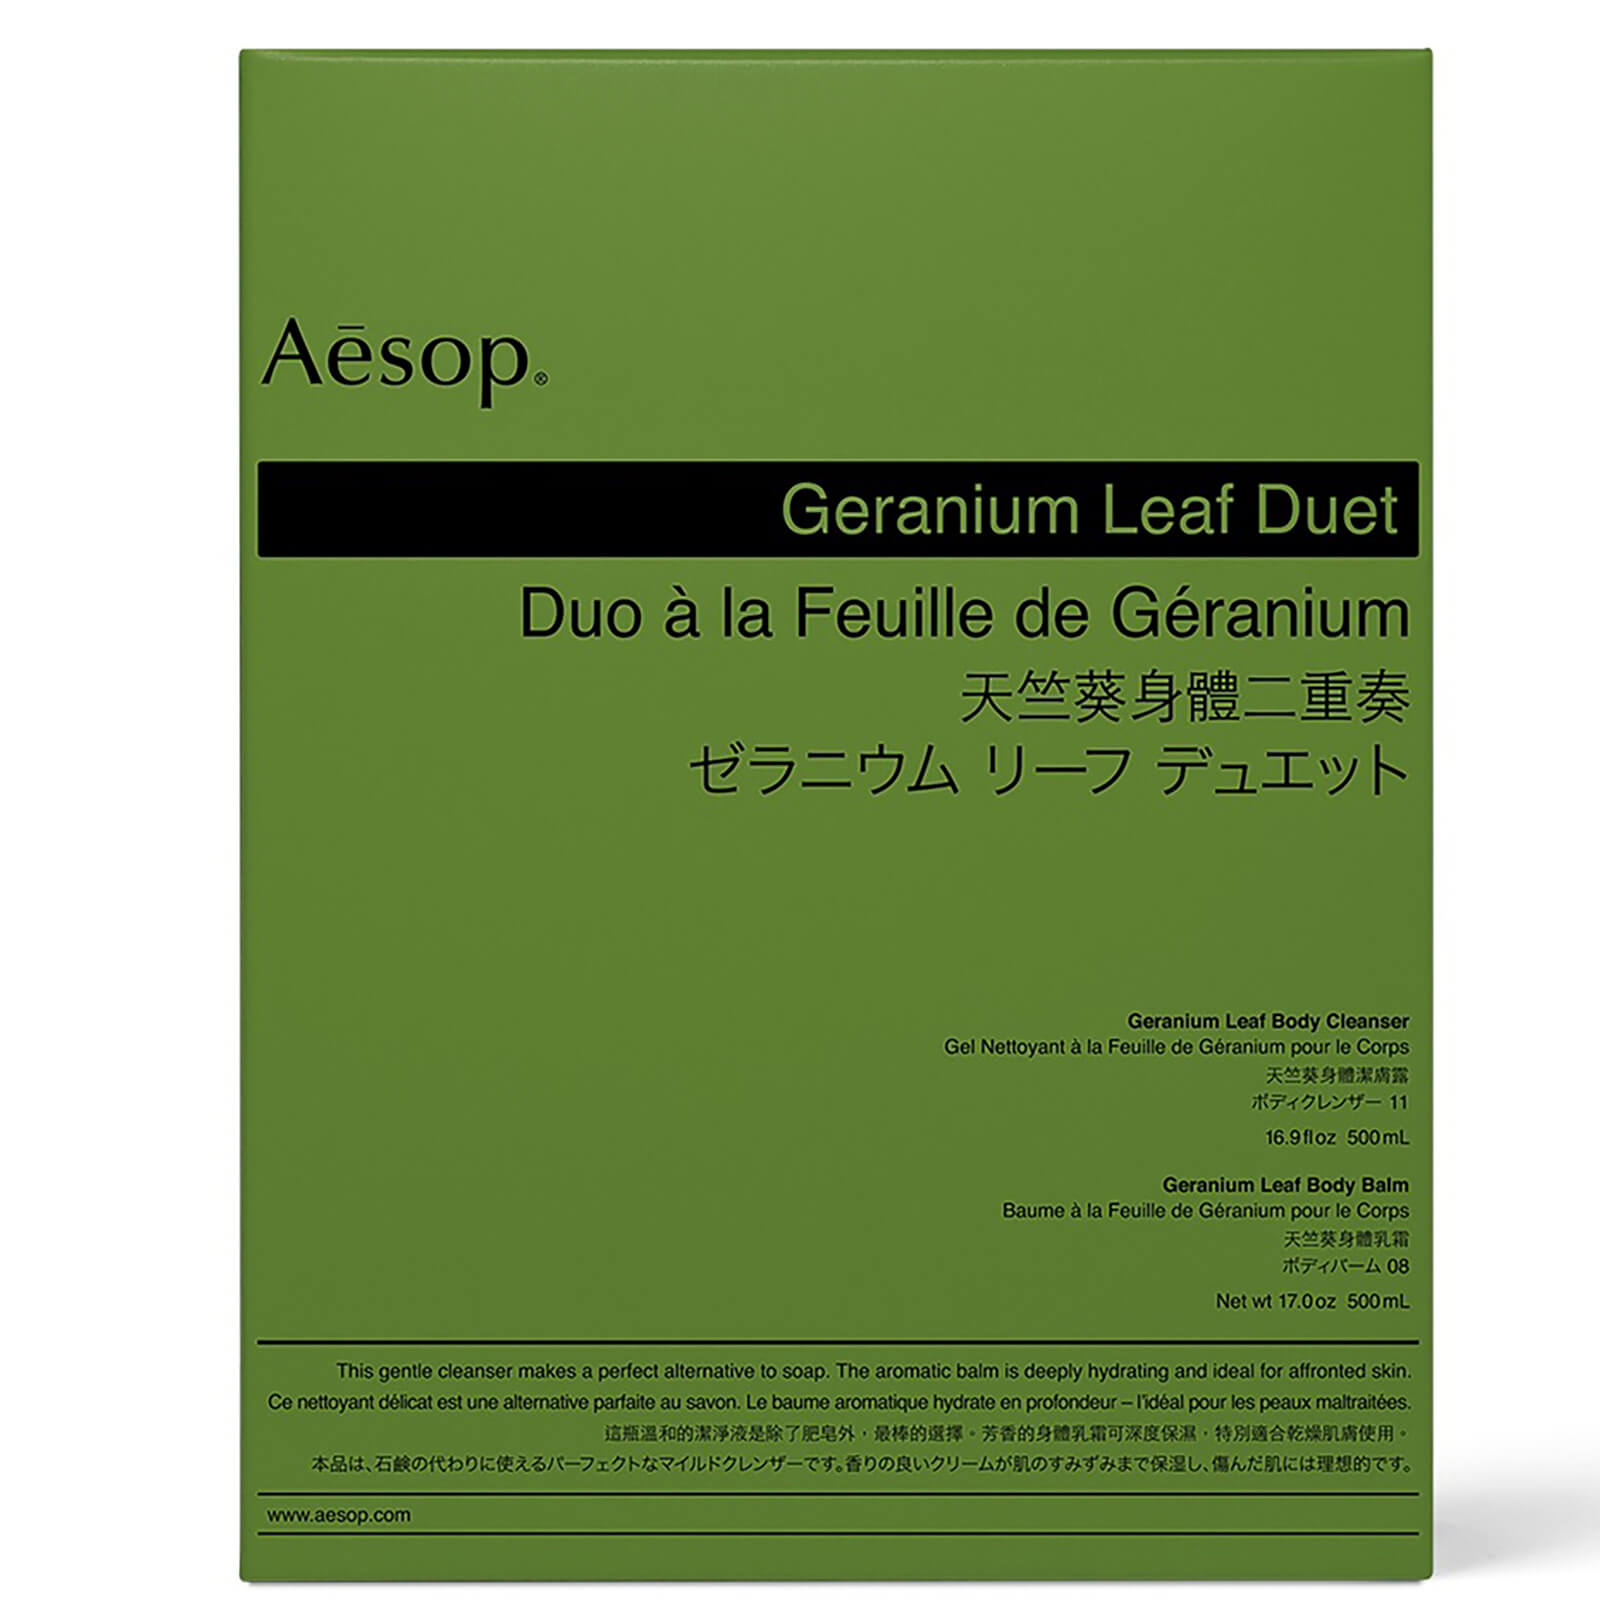 AESOP GERANIUM LEAF BODY CLEANSER AND BALM DUET,APB74